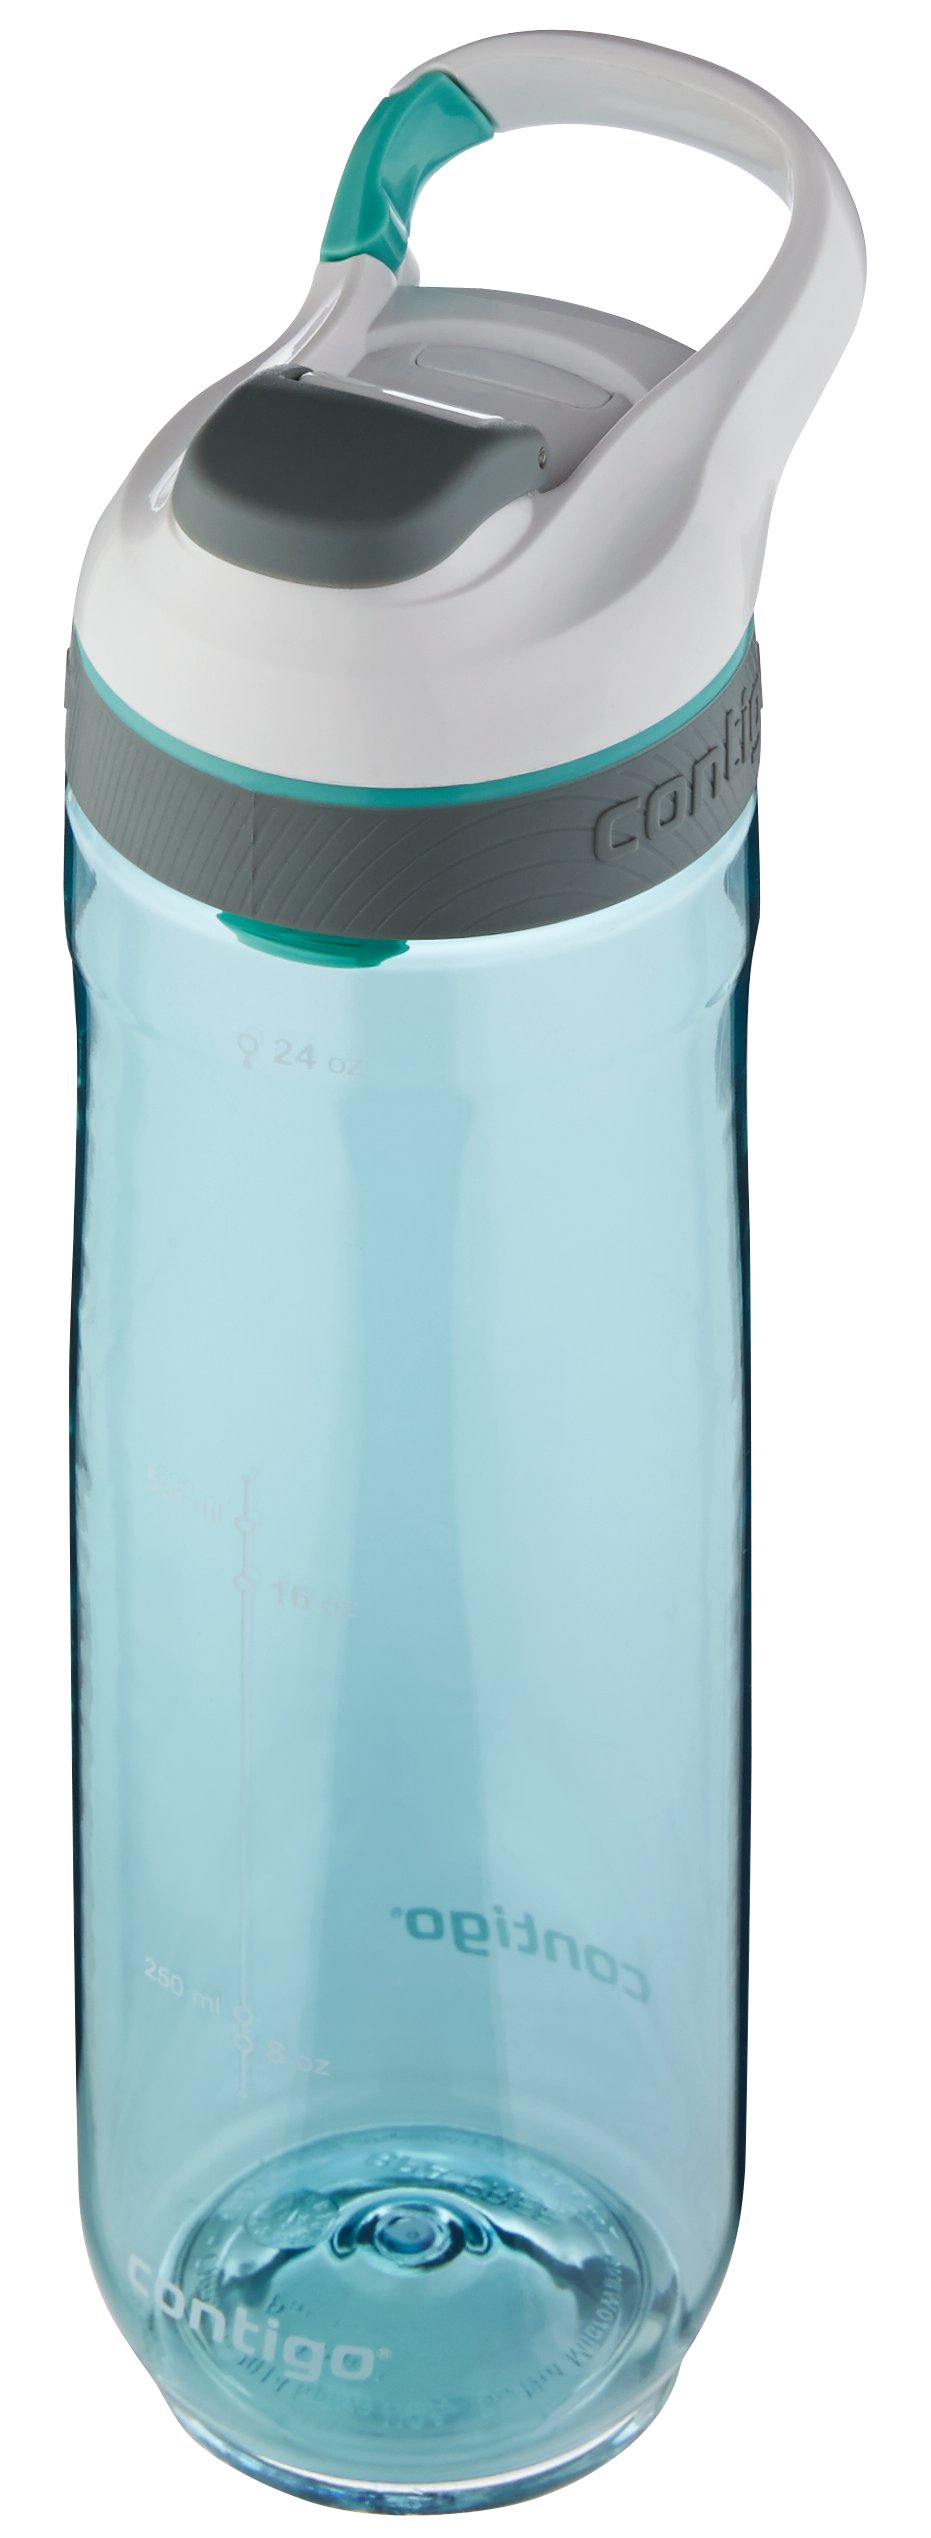 Contigo Cortland AUTOSEAL™ Water Bottle, 720 ml (Grapevine)